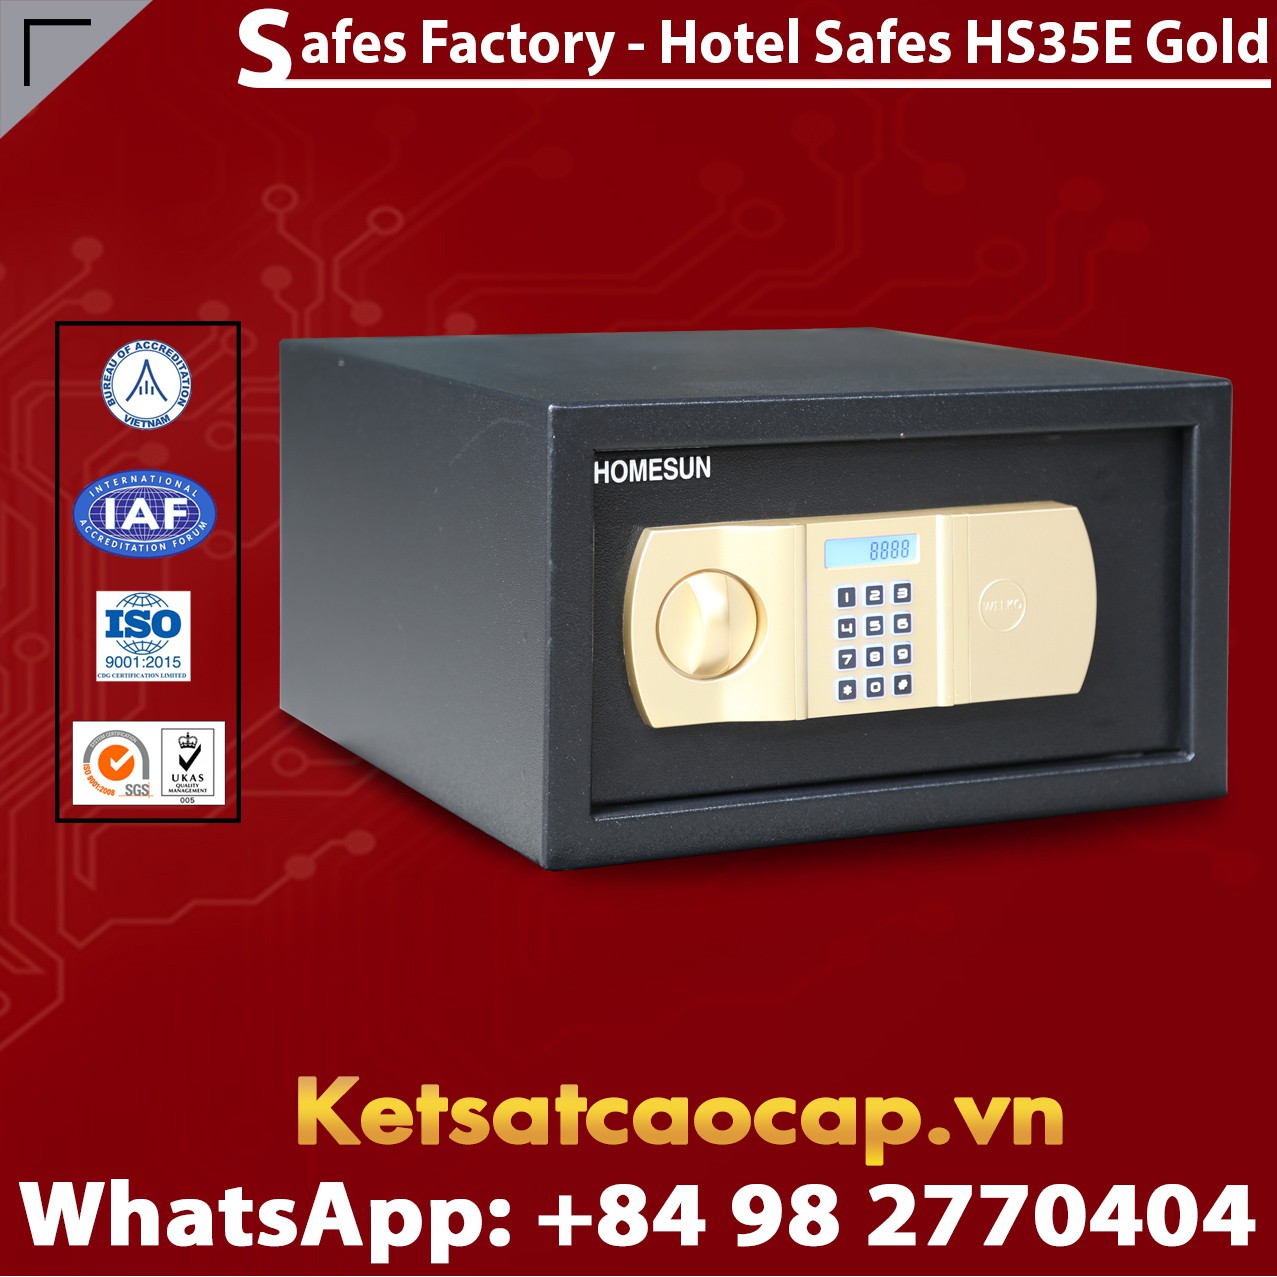 Safe in Hotel HOMESUN HS35 E Gold